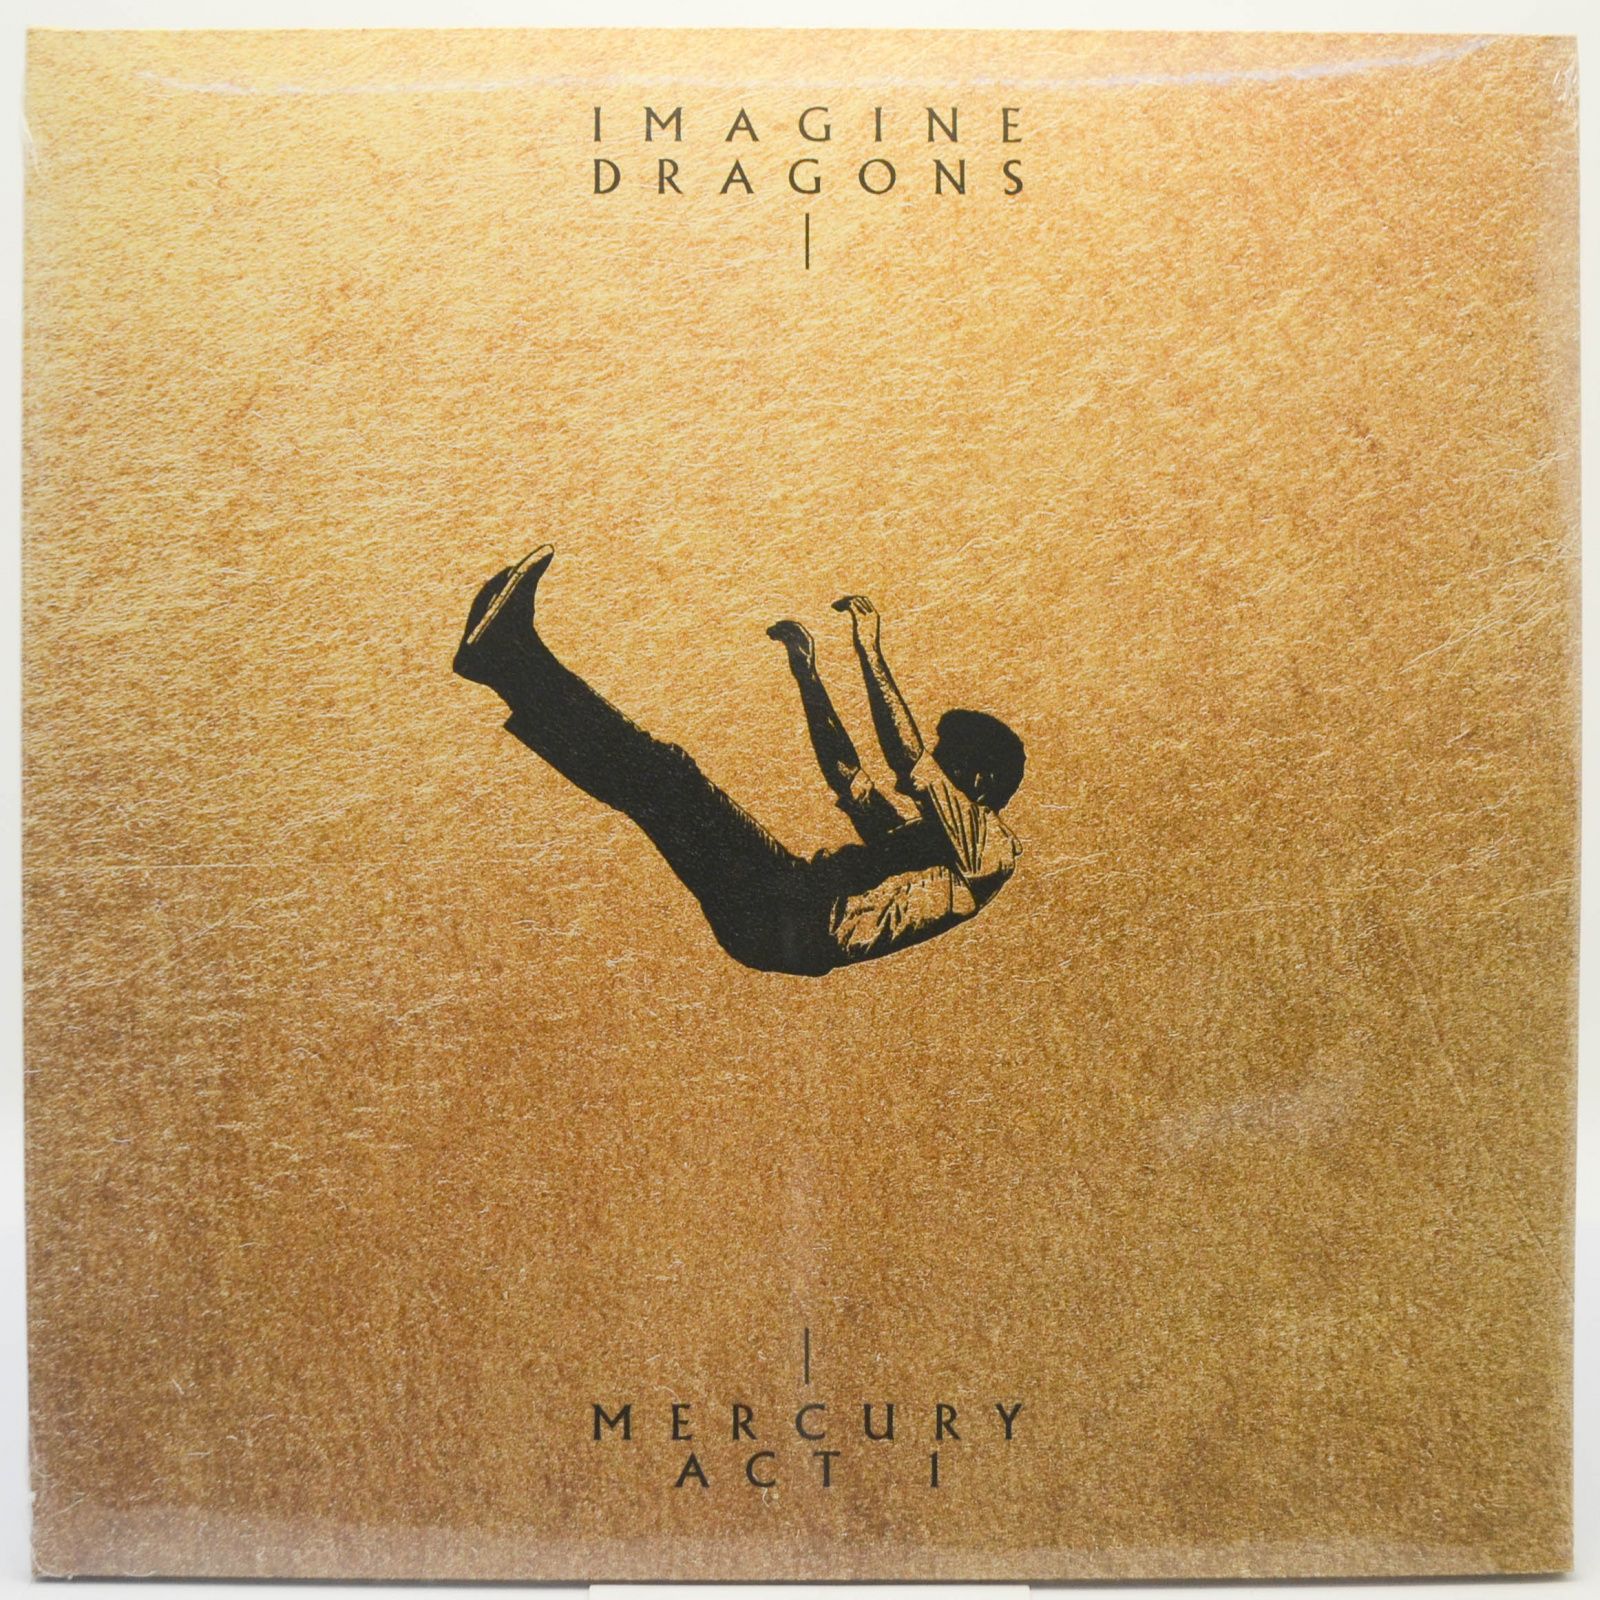 Imagine Dragons — Mercury - Act 1, 2021